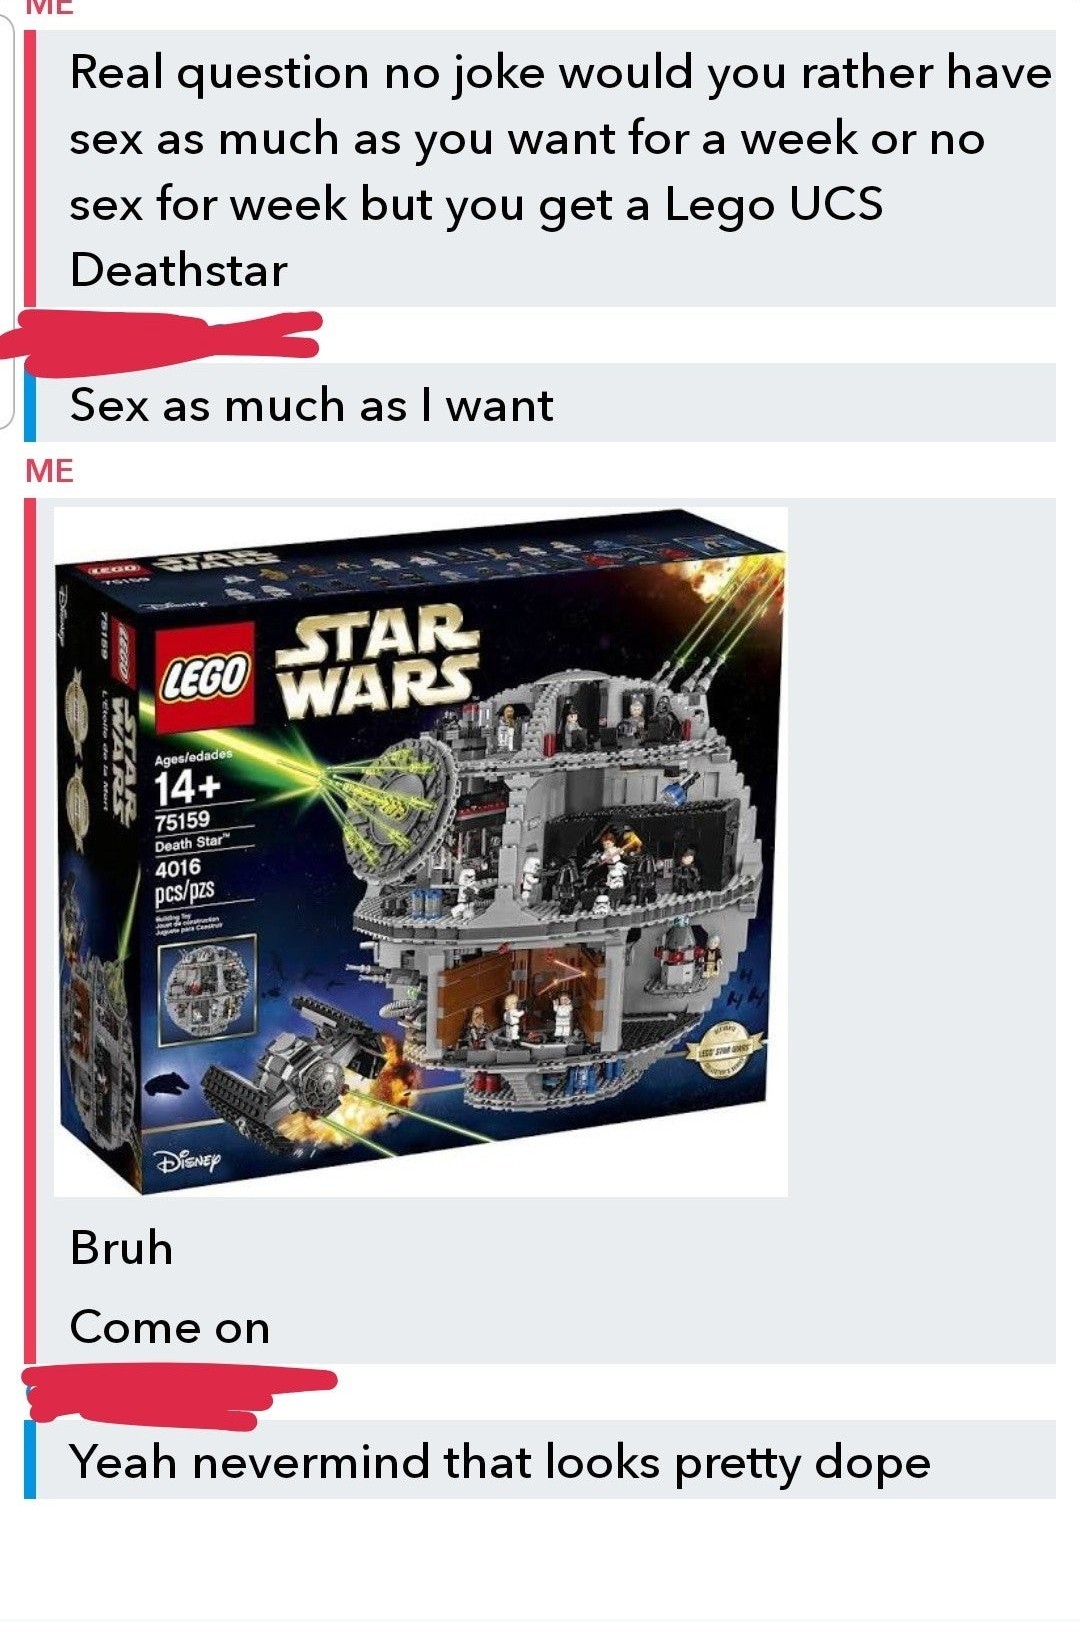 Lego - meme